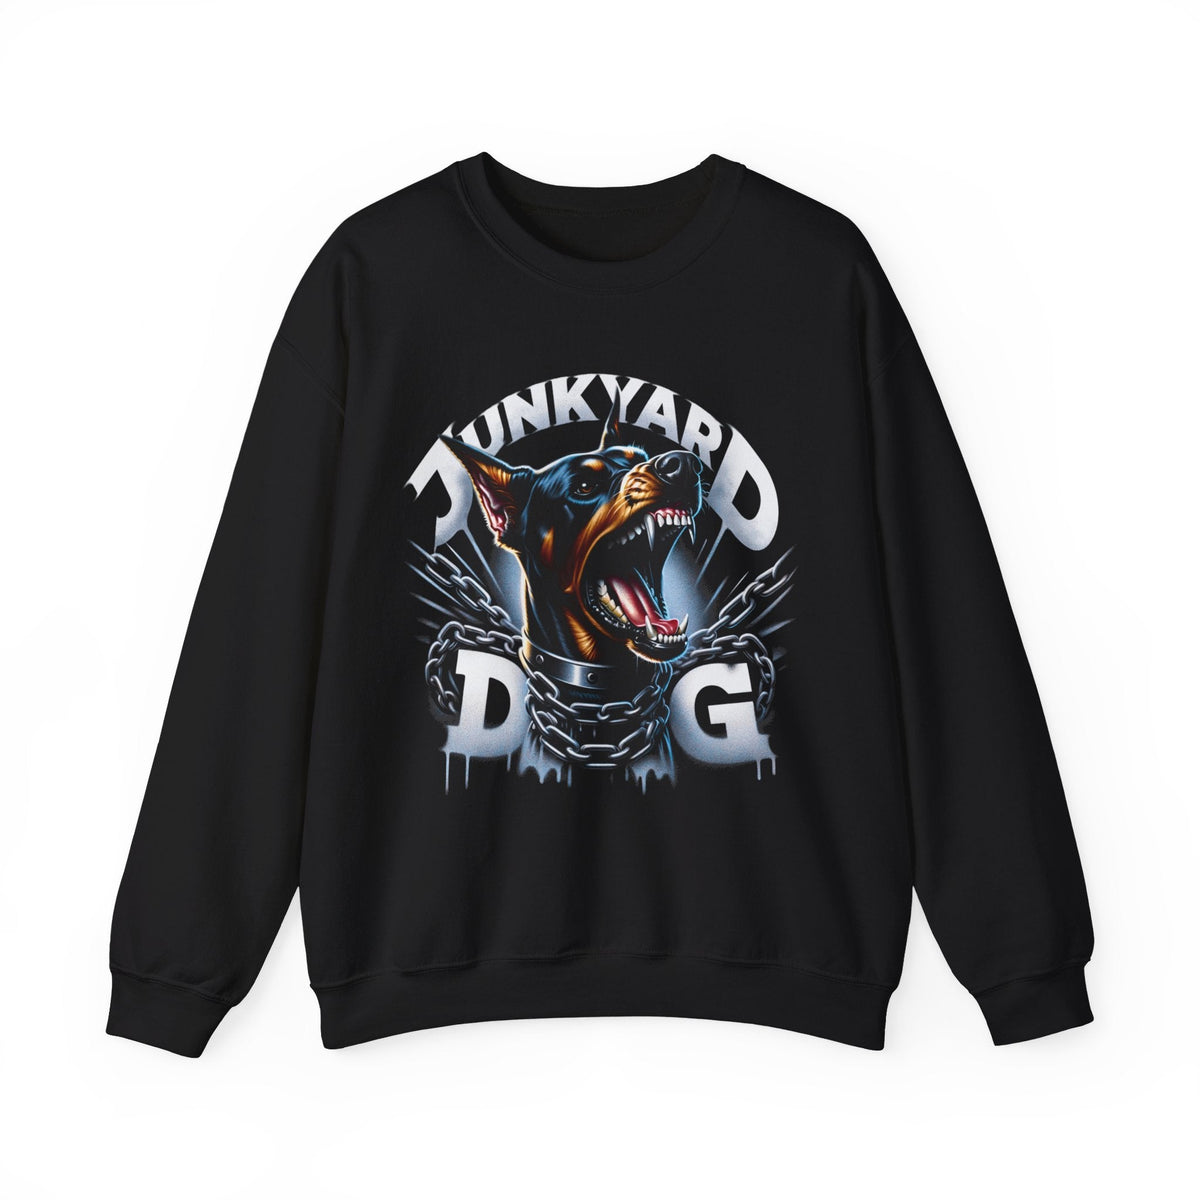 Junkyard Dog Crewneck Sweatshirt - Goth Cloth Co.Sweatshirt17970945812635893740